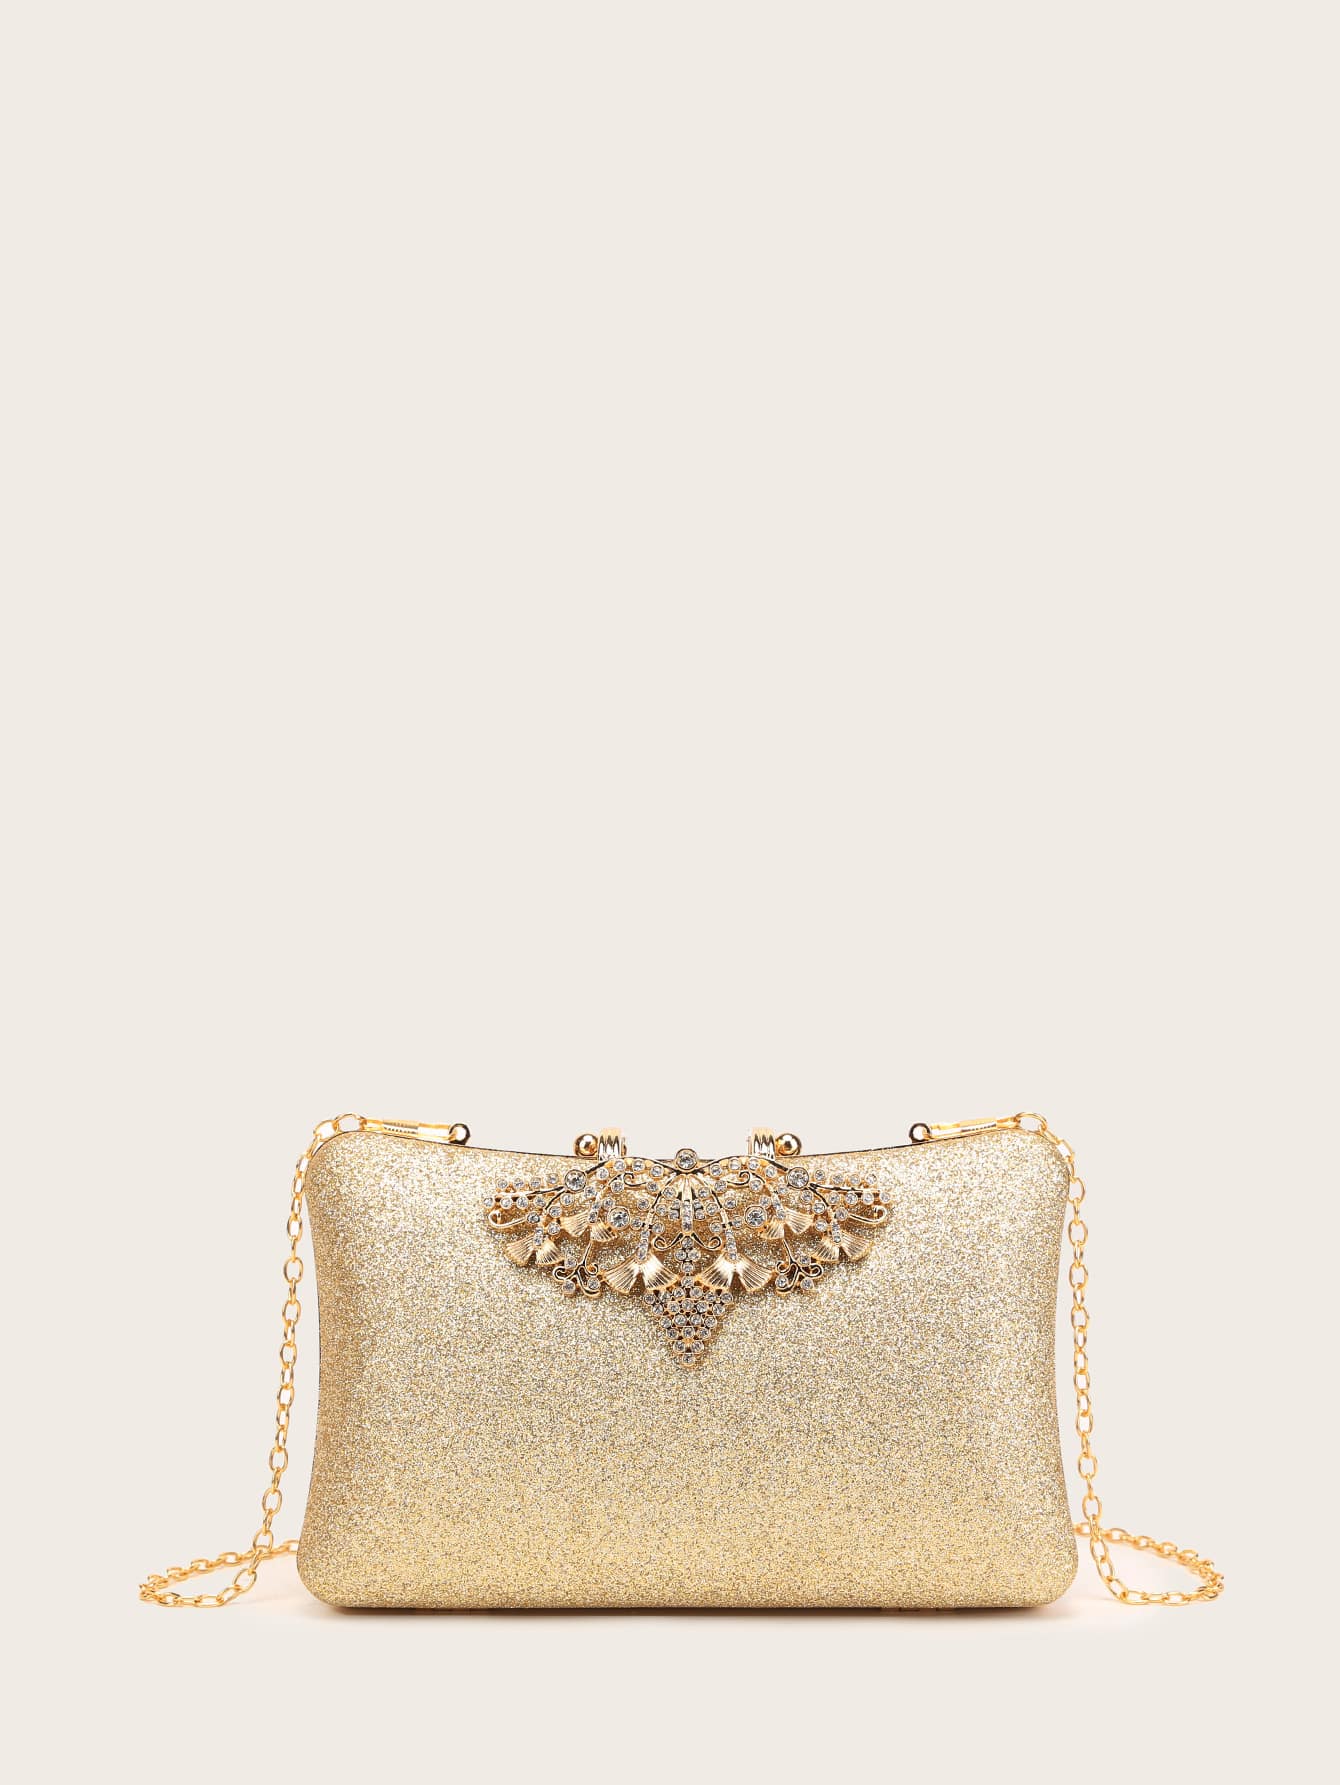 Rhinestone Decor Glitter Clutch Bag